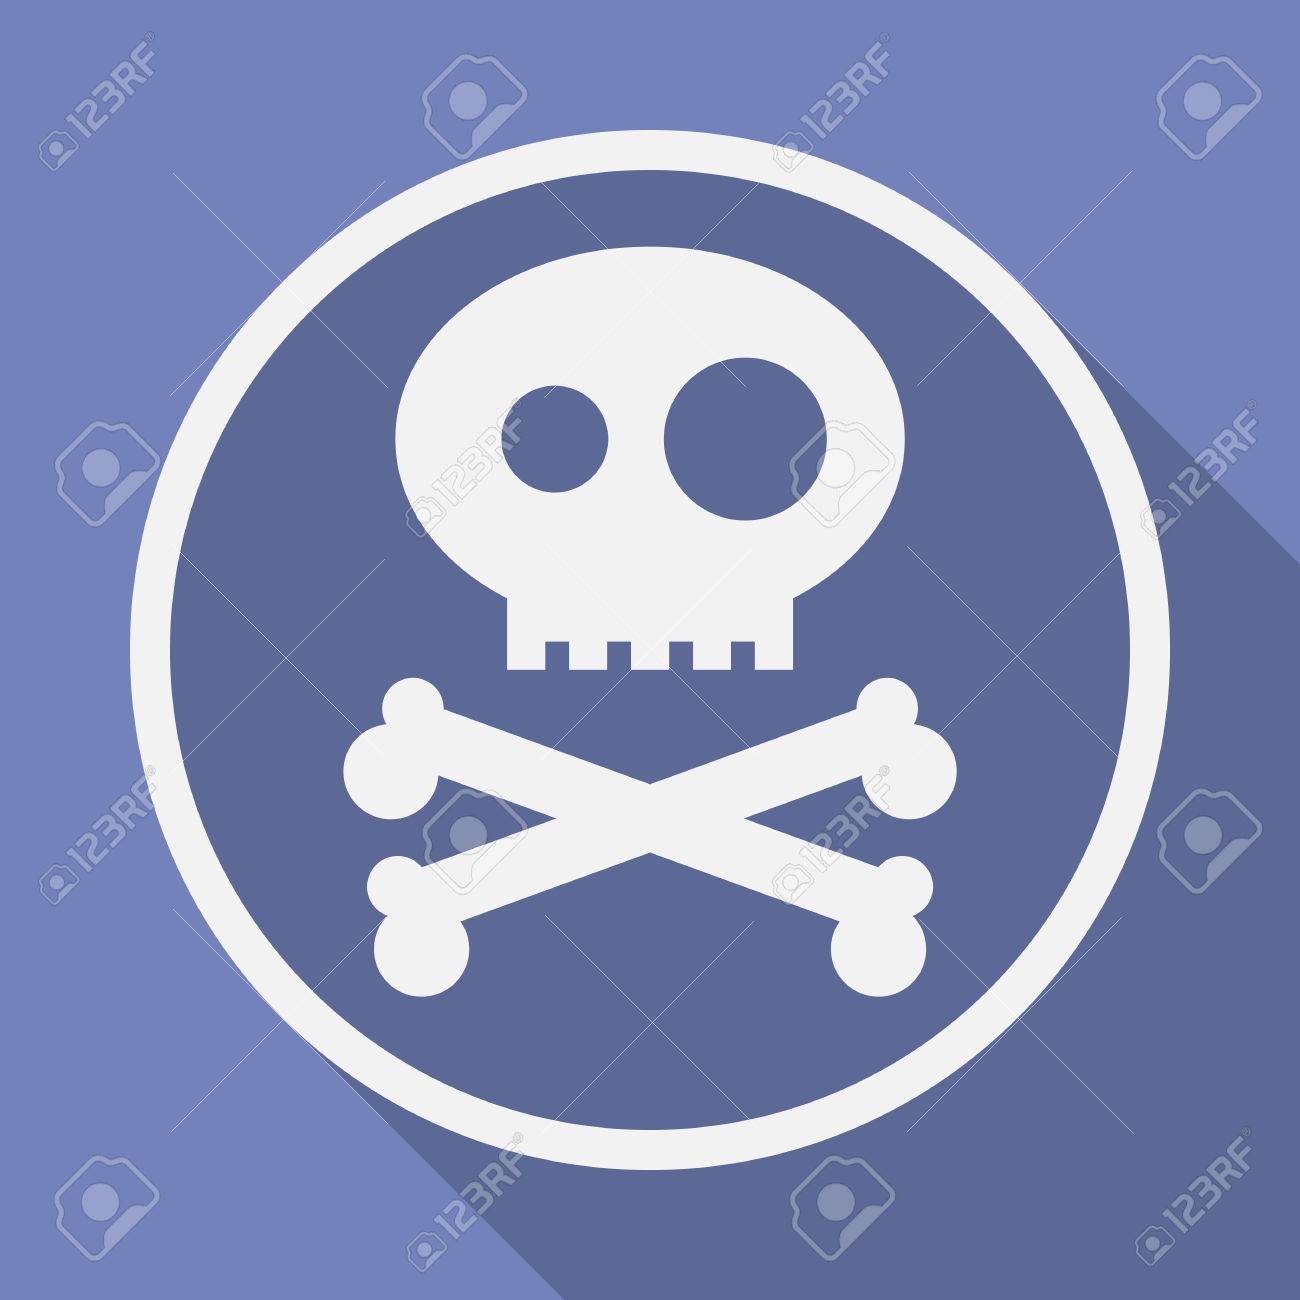 Pirate Icons skull and chest, treasure, map. Corsair simbols set 